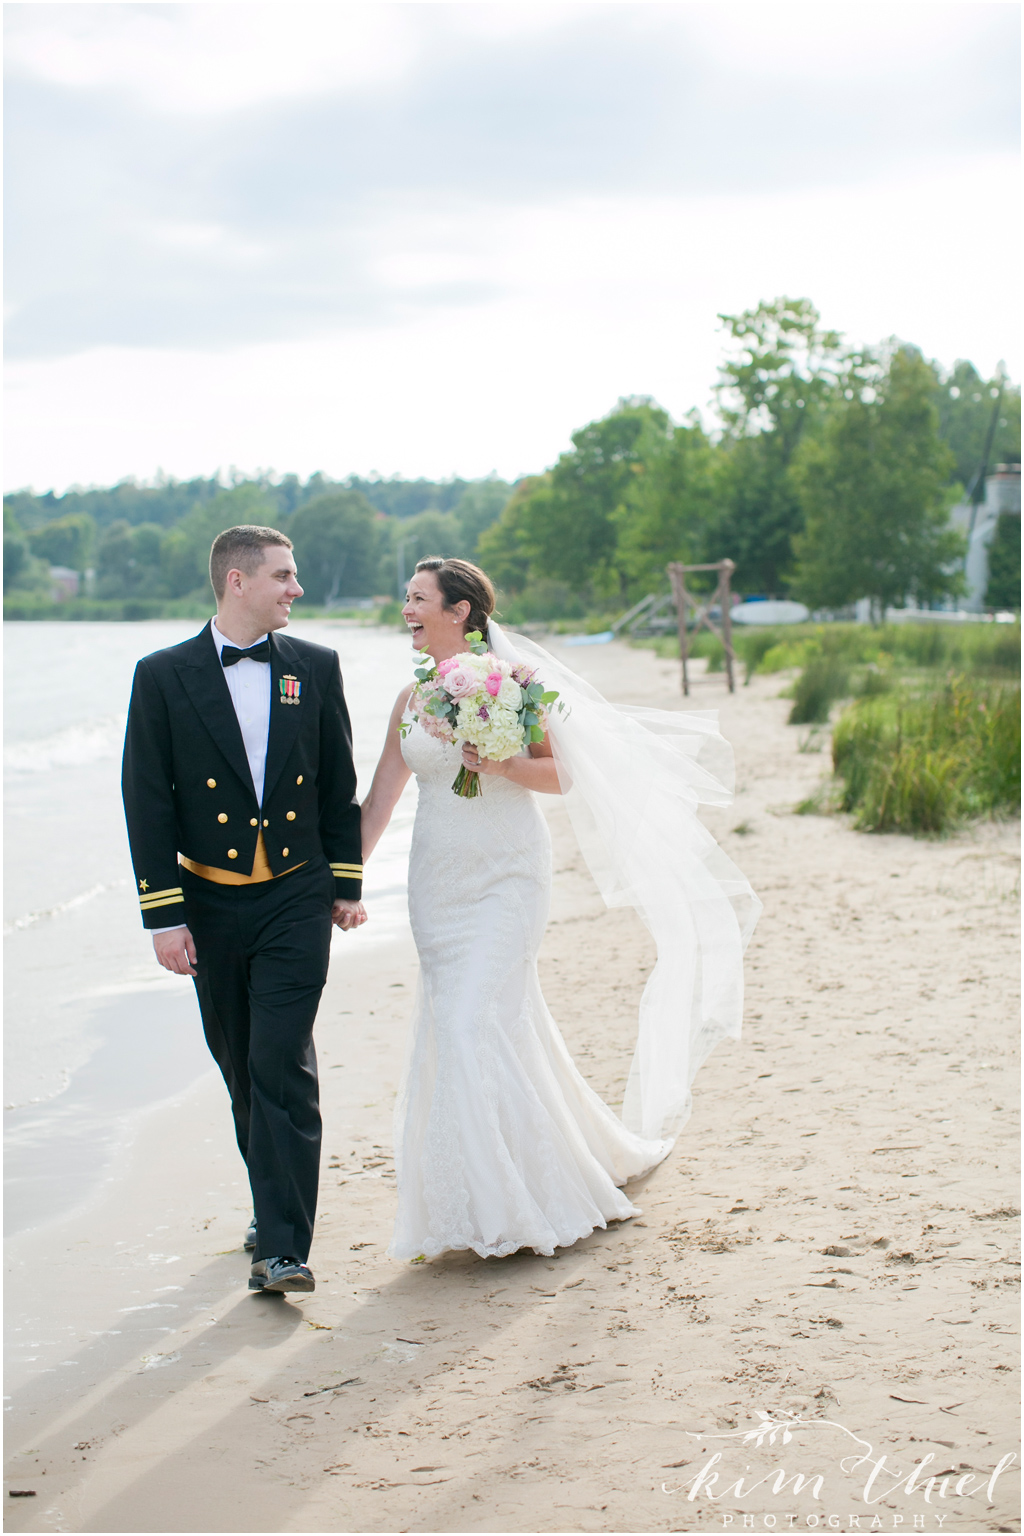 Kim-Thiel-Photography-Private-Door-County-Beach-Wedding-56